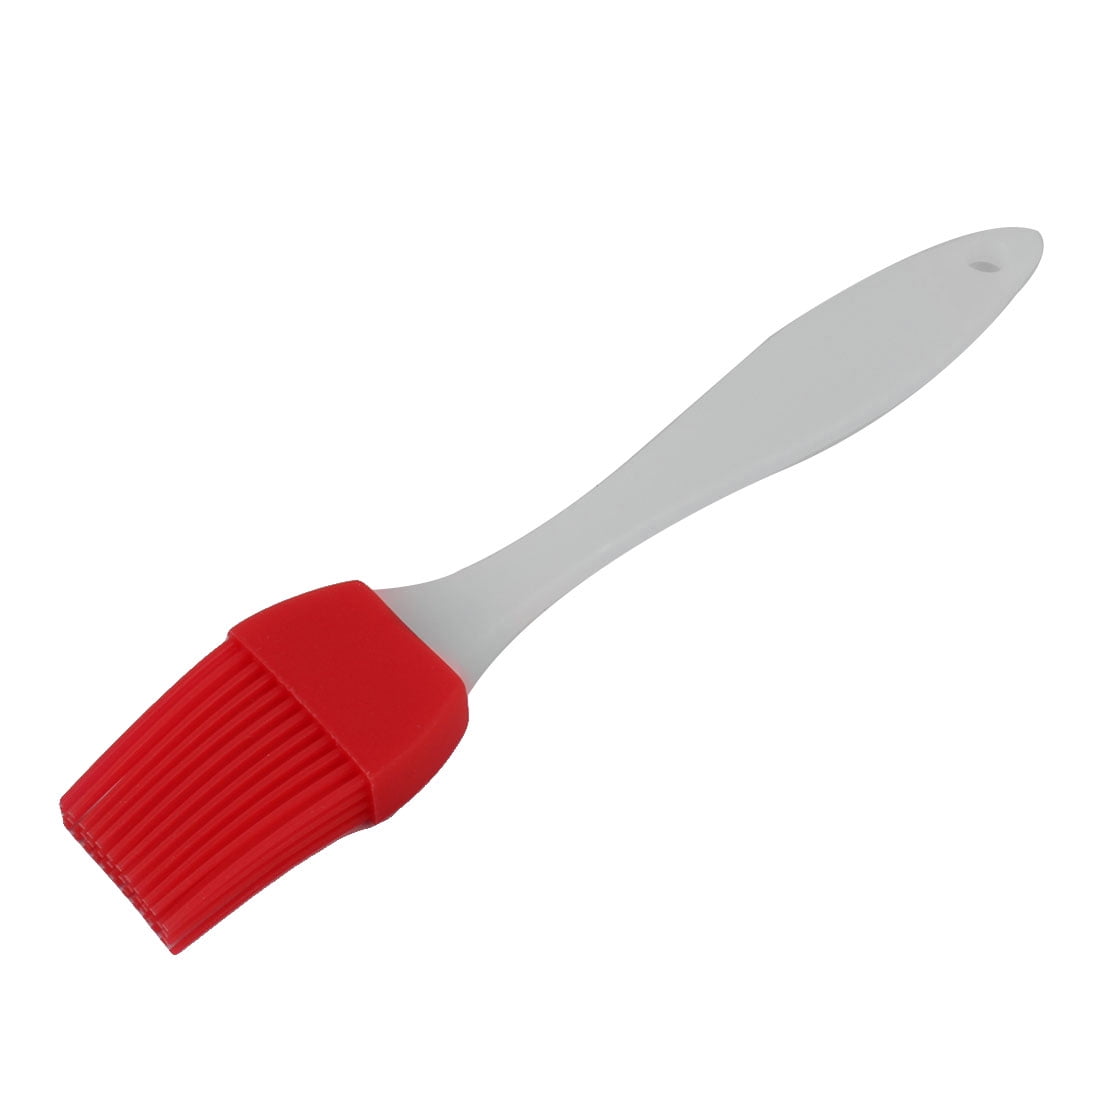 grill basting brush, red - Whisk